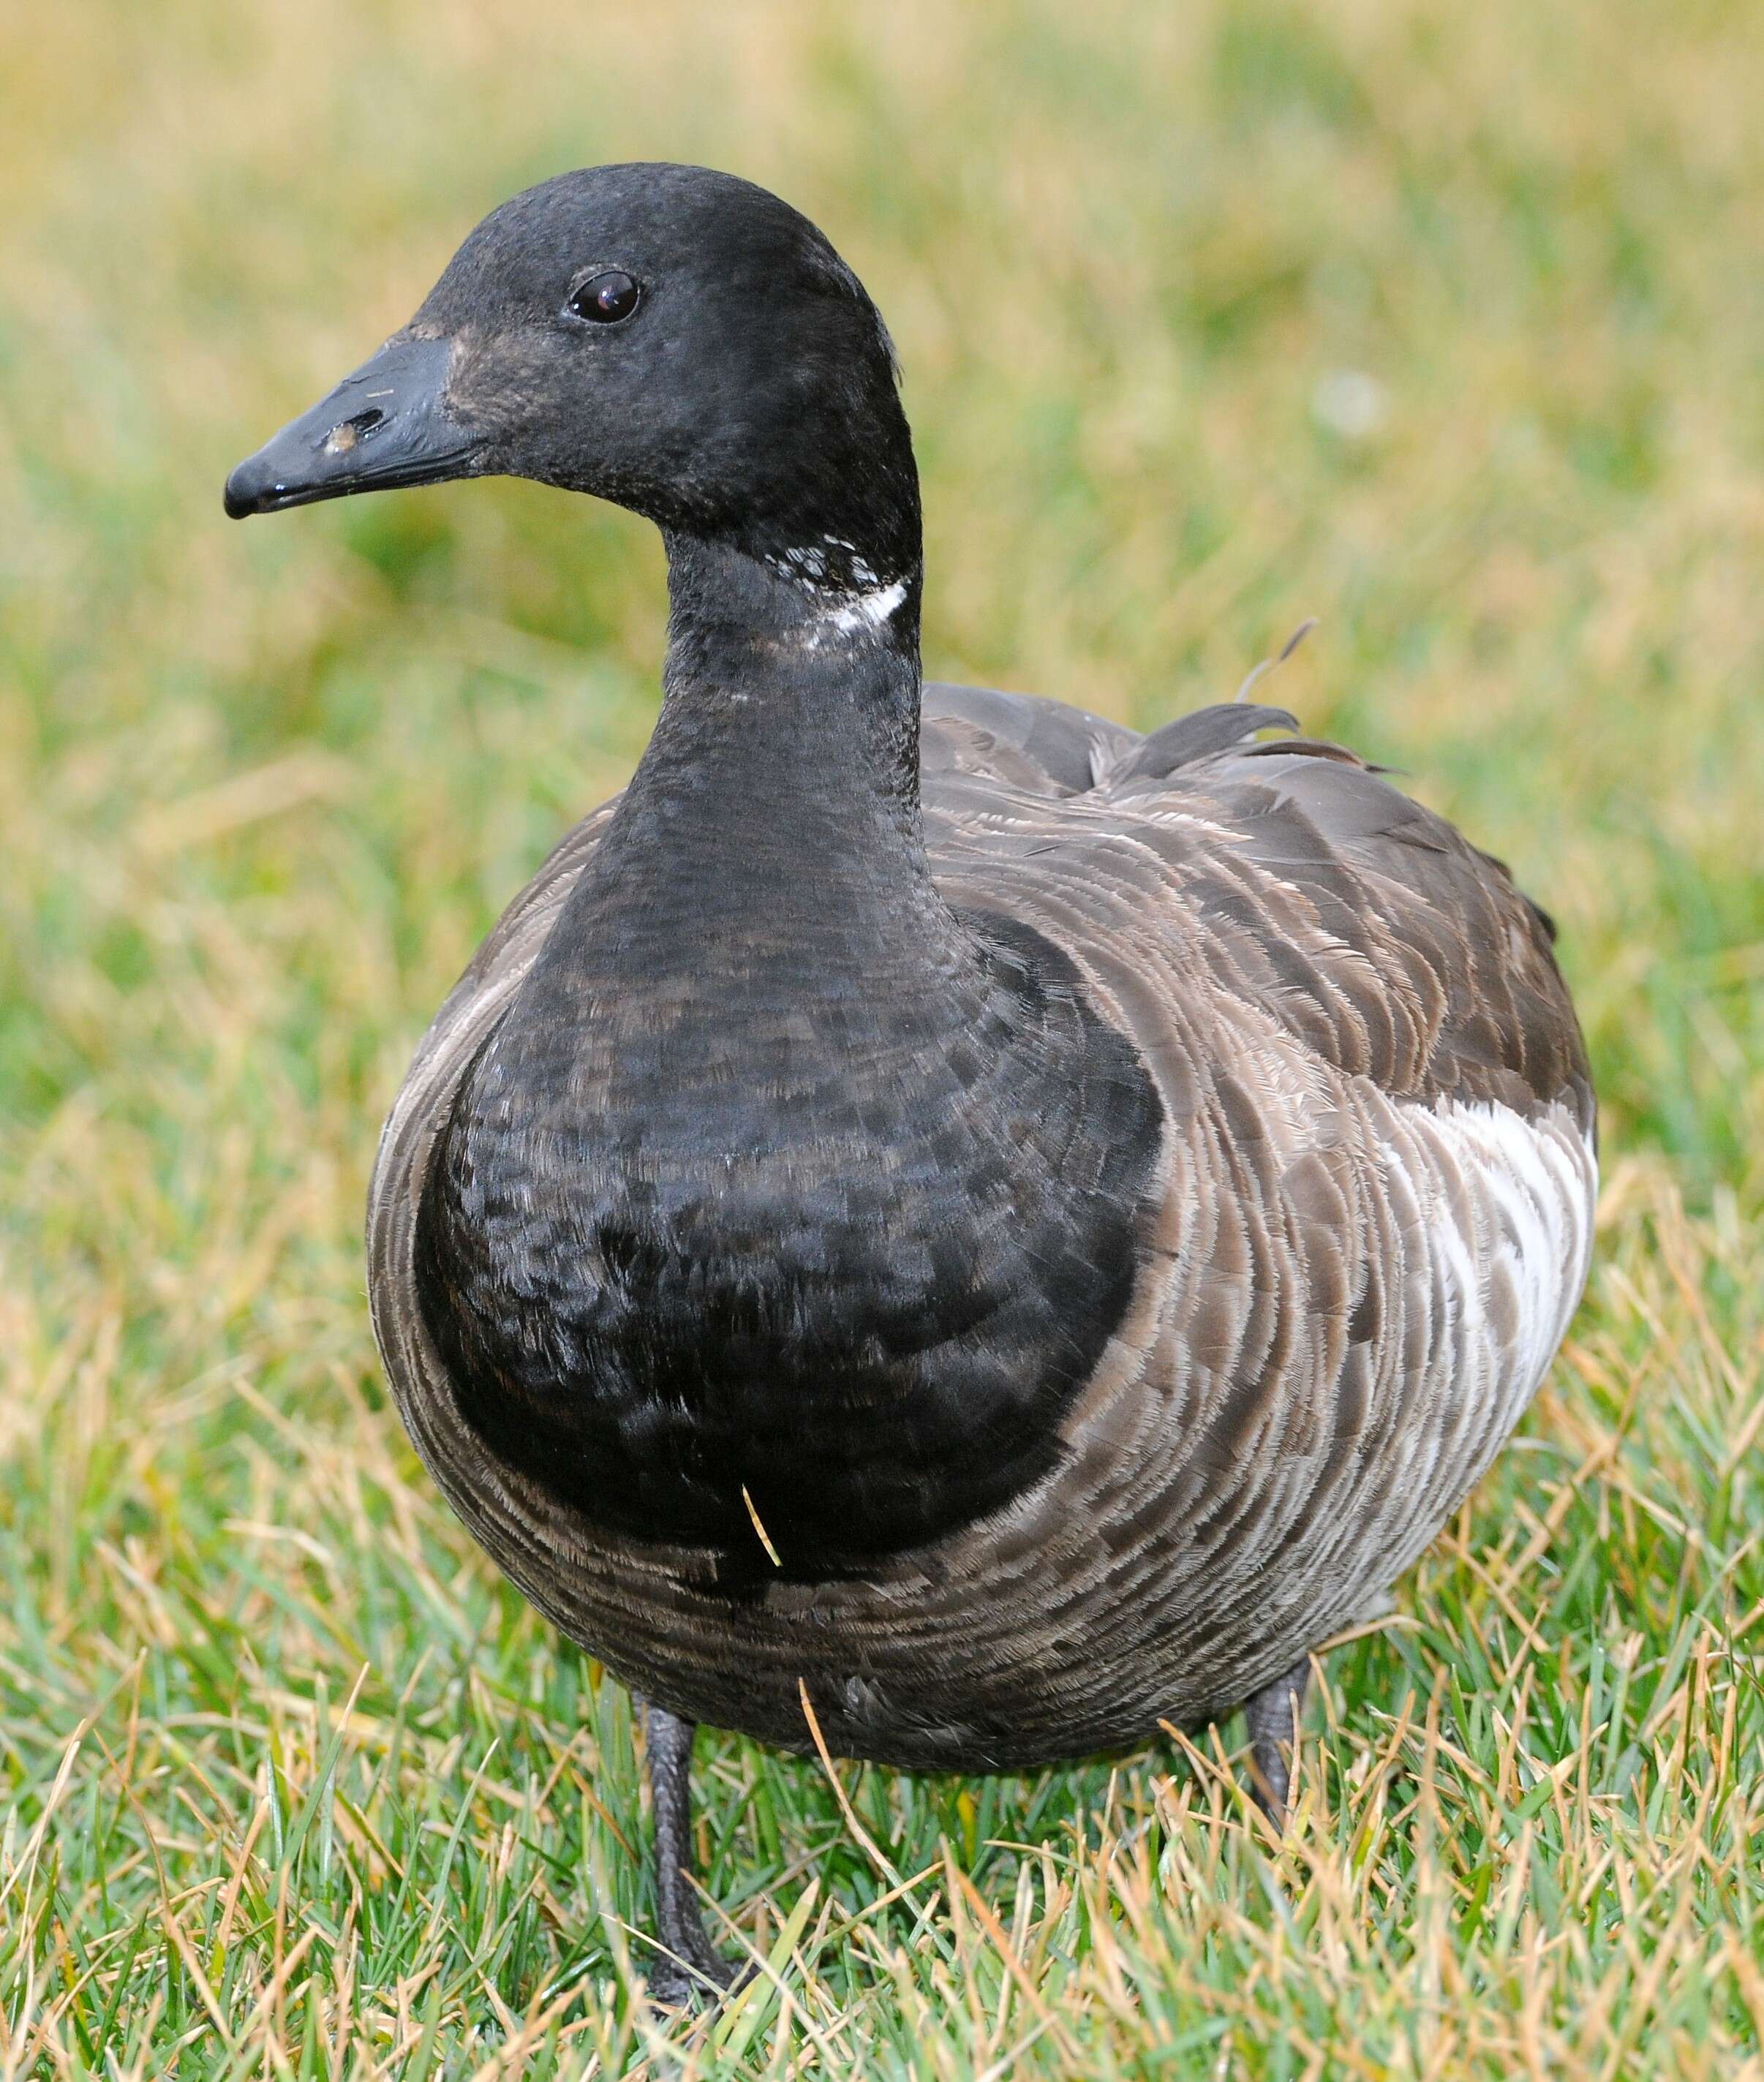 Image of Brant Goose